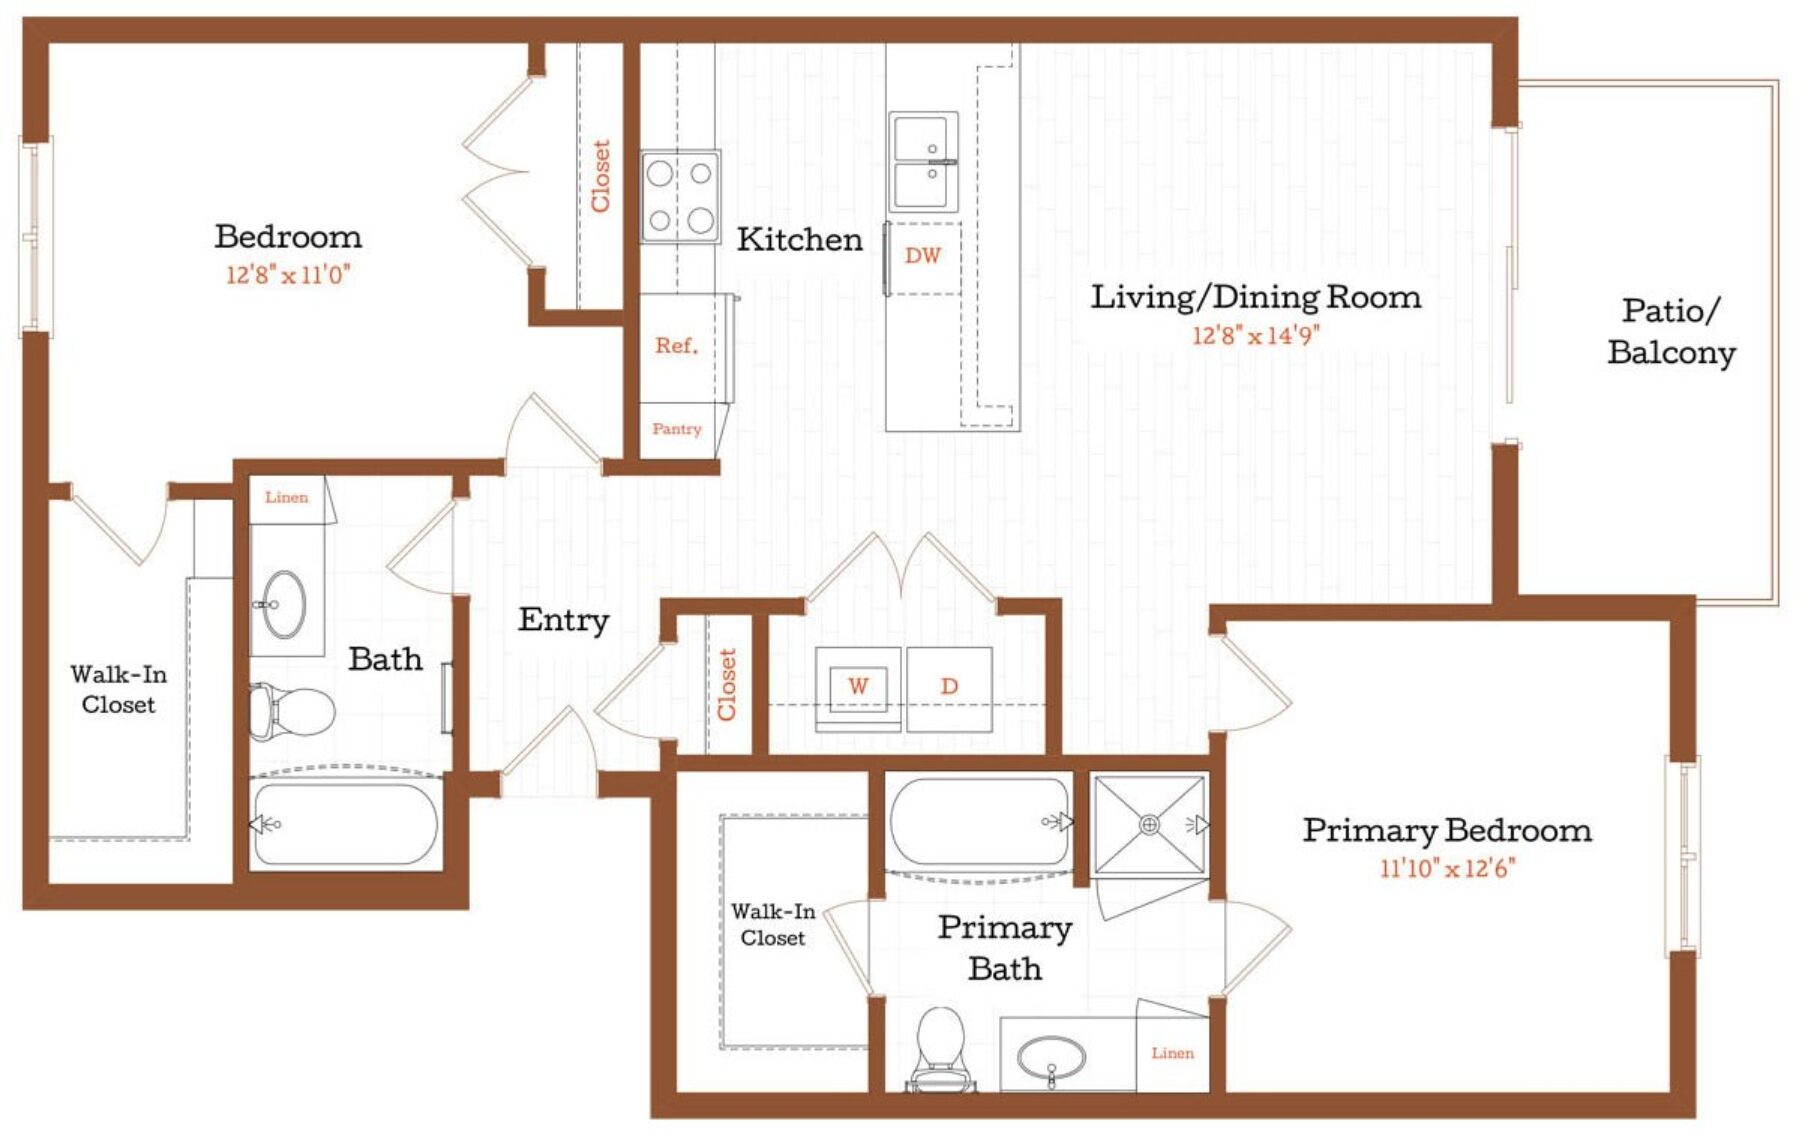 Plan Image: B1 - 2 Bedroom